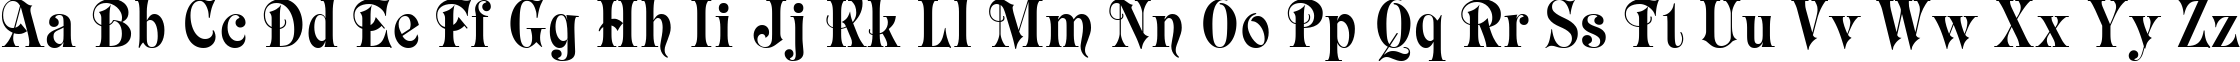 Пример написания английского алфавита шрифтом Rubius